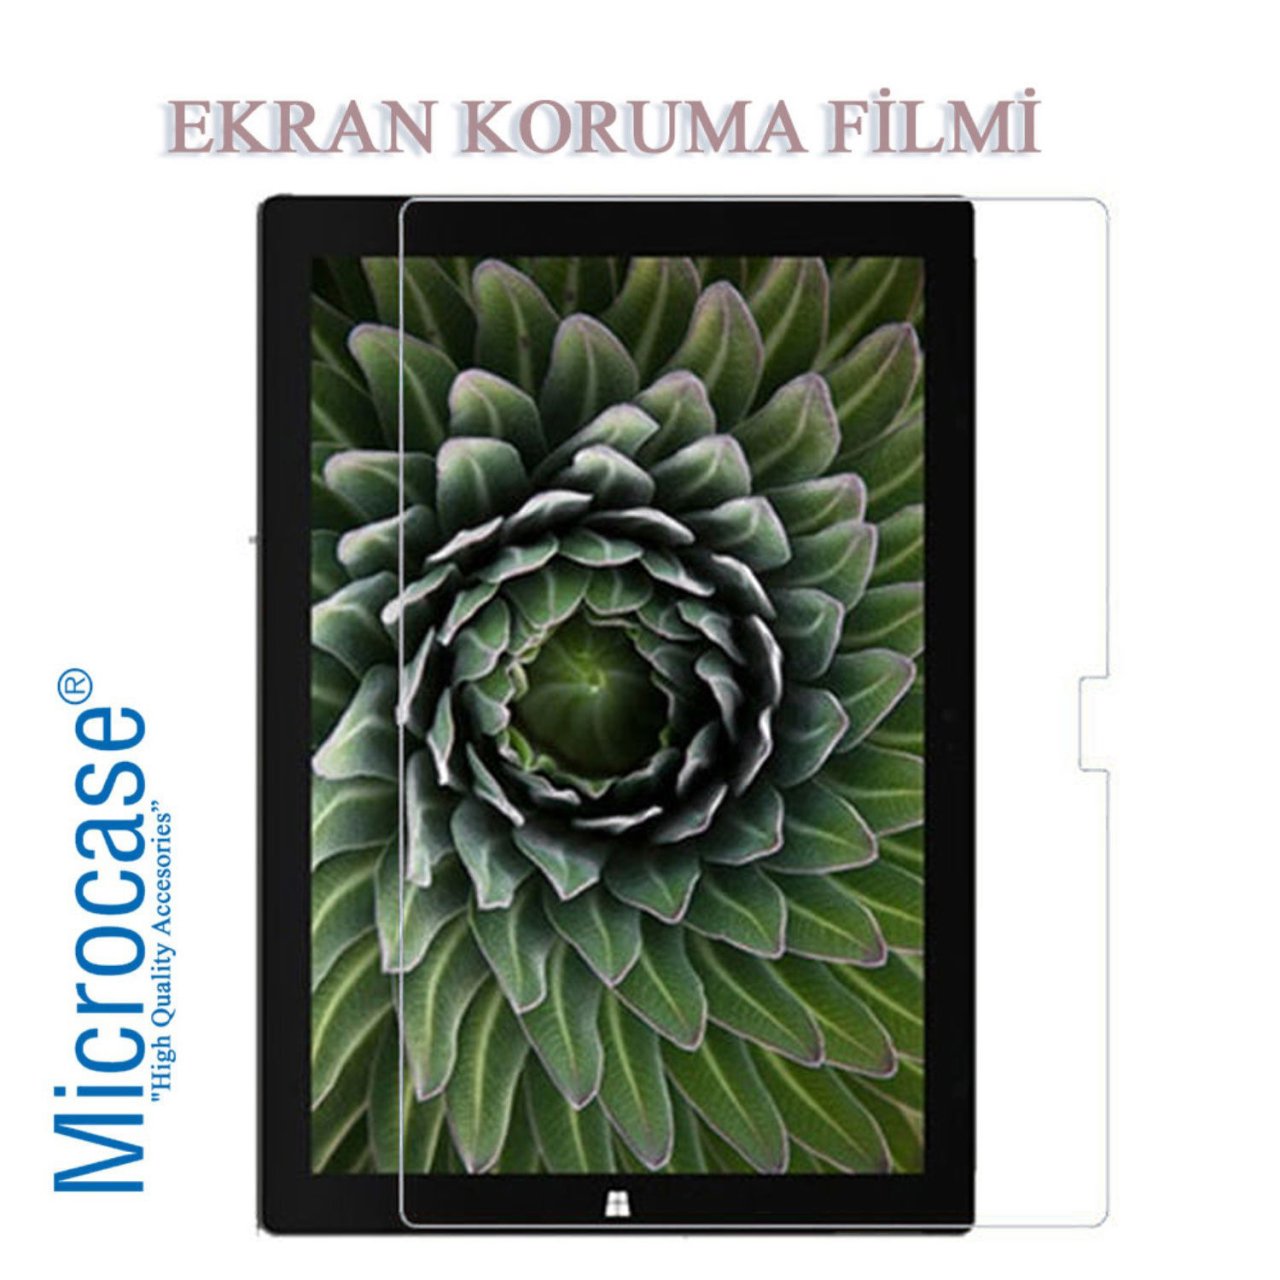 Microcase Microsoft Surface Pro 3 Ekran Koruma Filmi 1 ADET